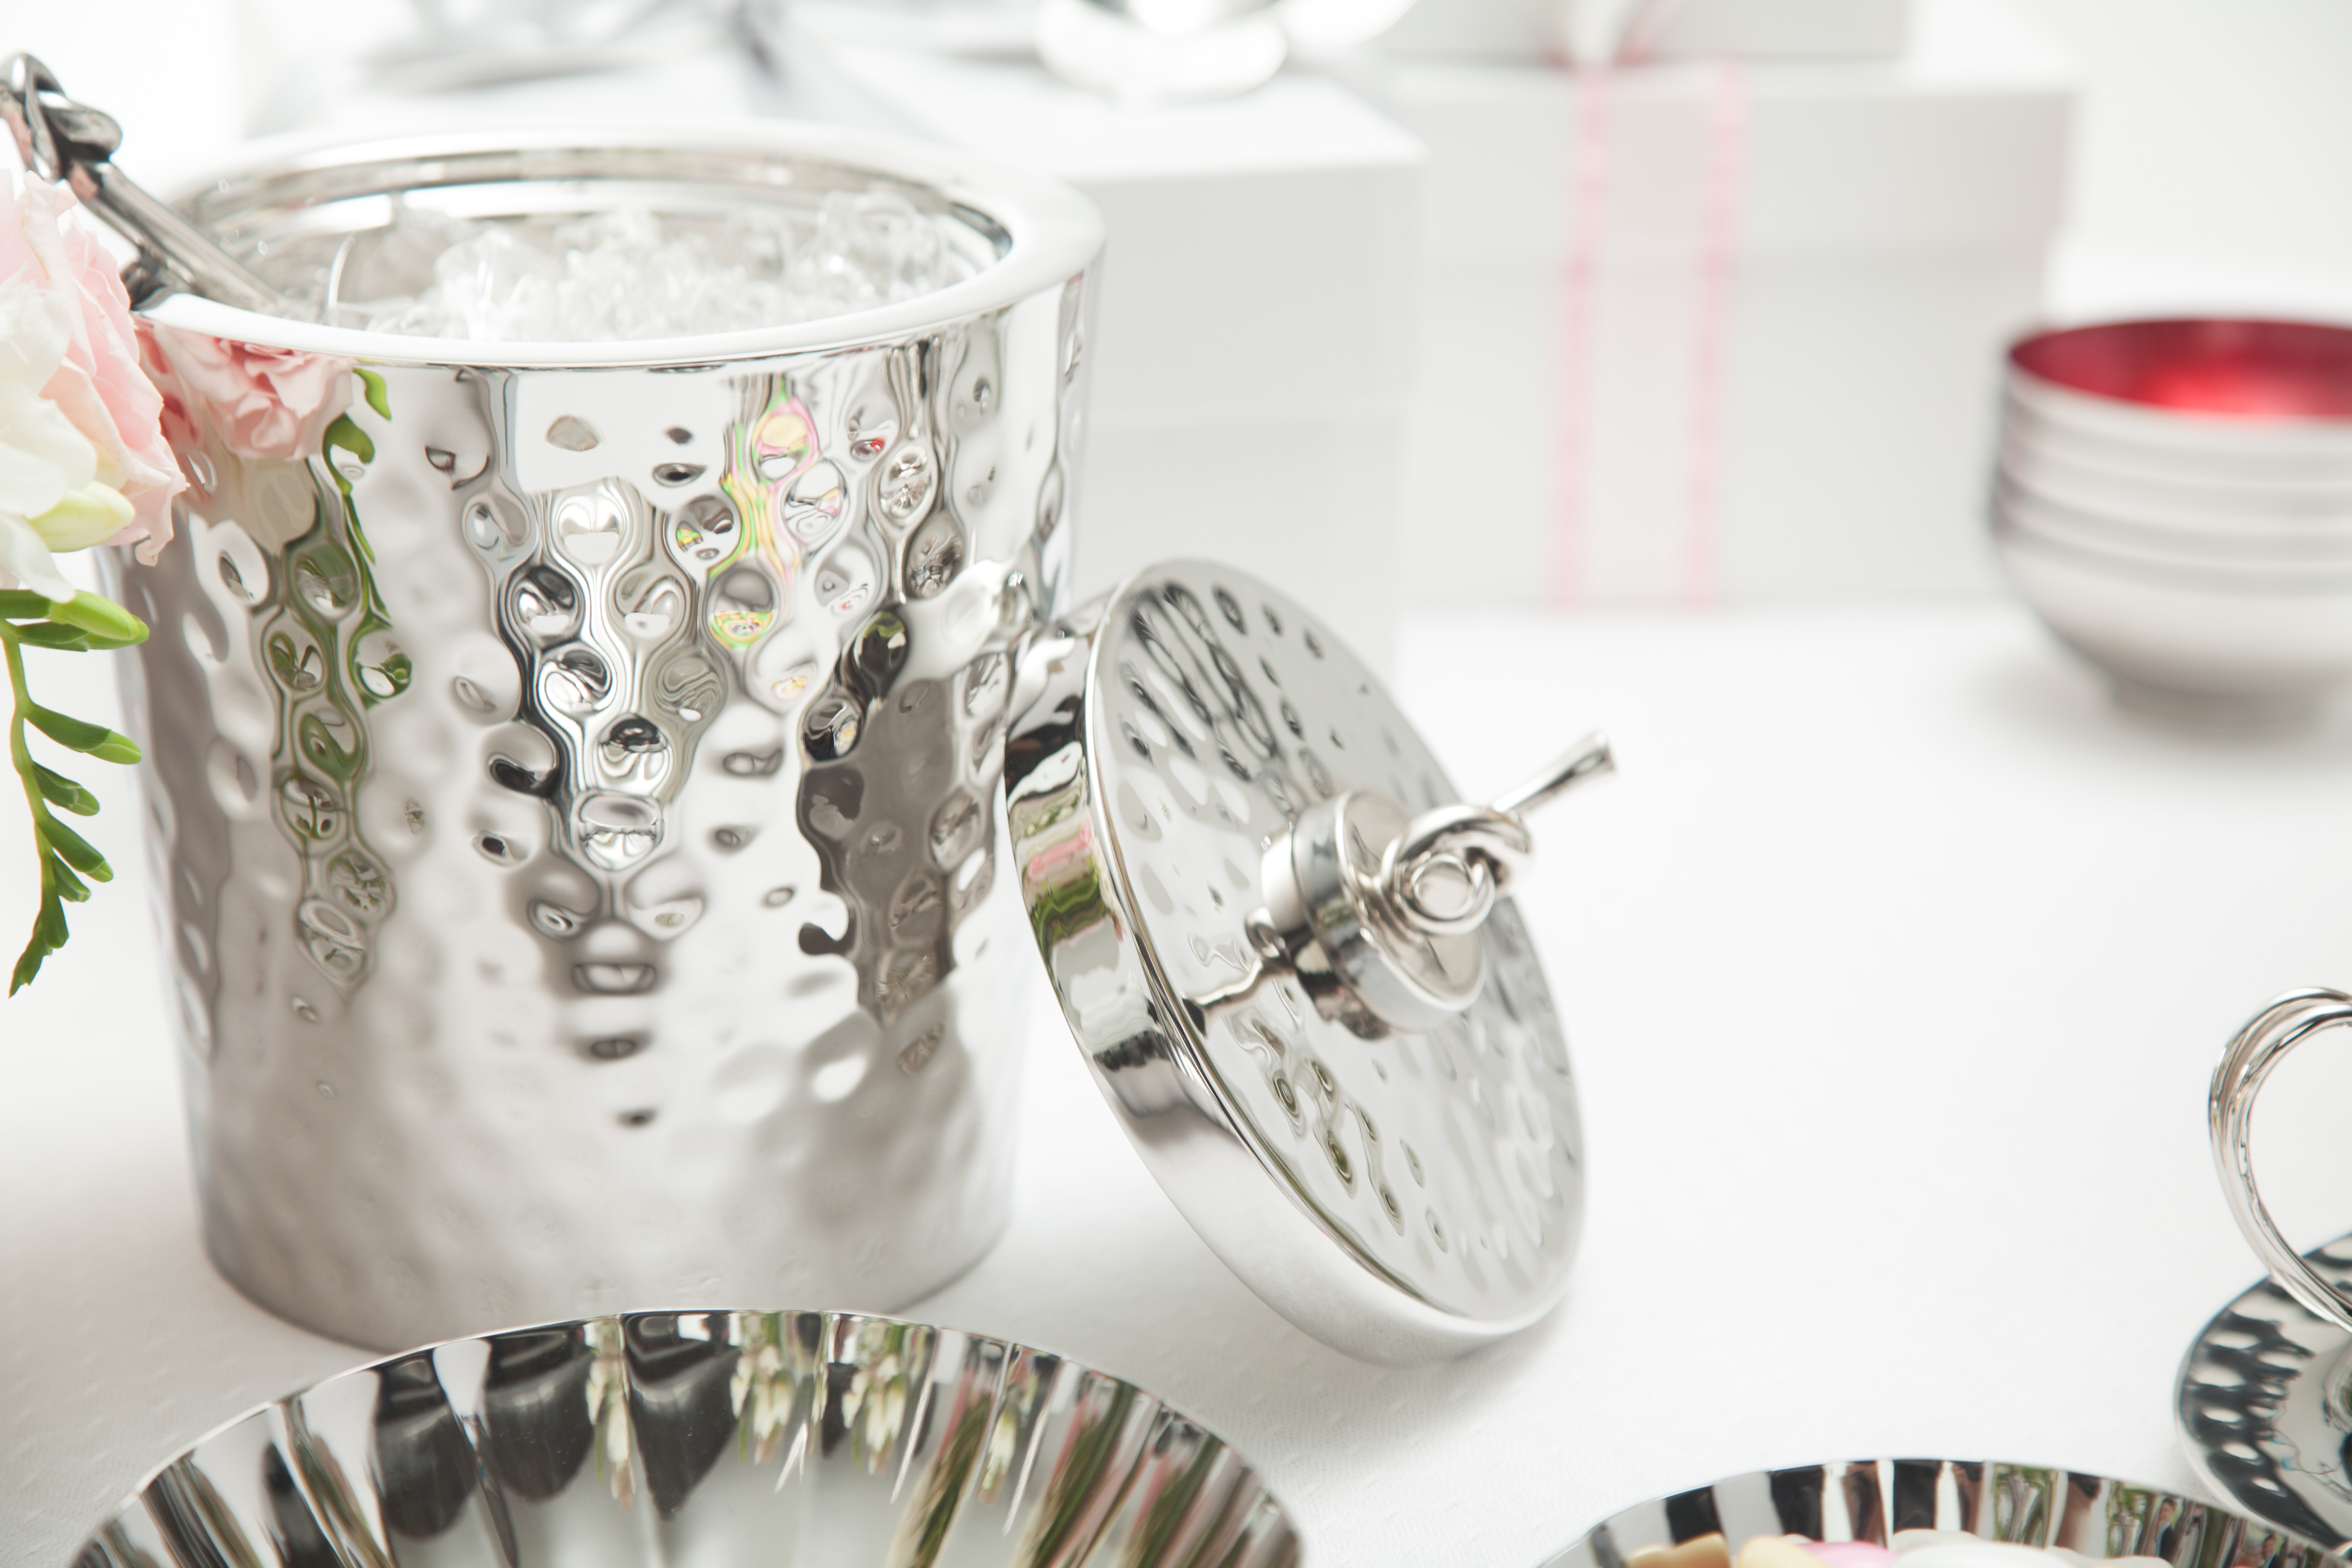 Mary Jurek Design stainless steel wedding gifts, bridal tabletop, home decor.